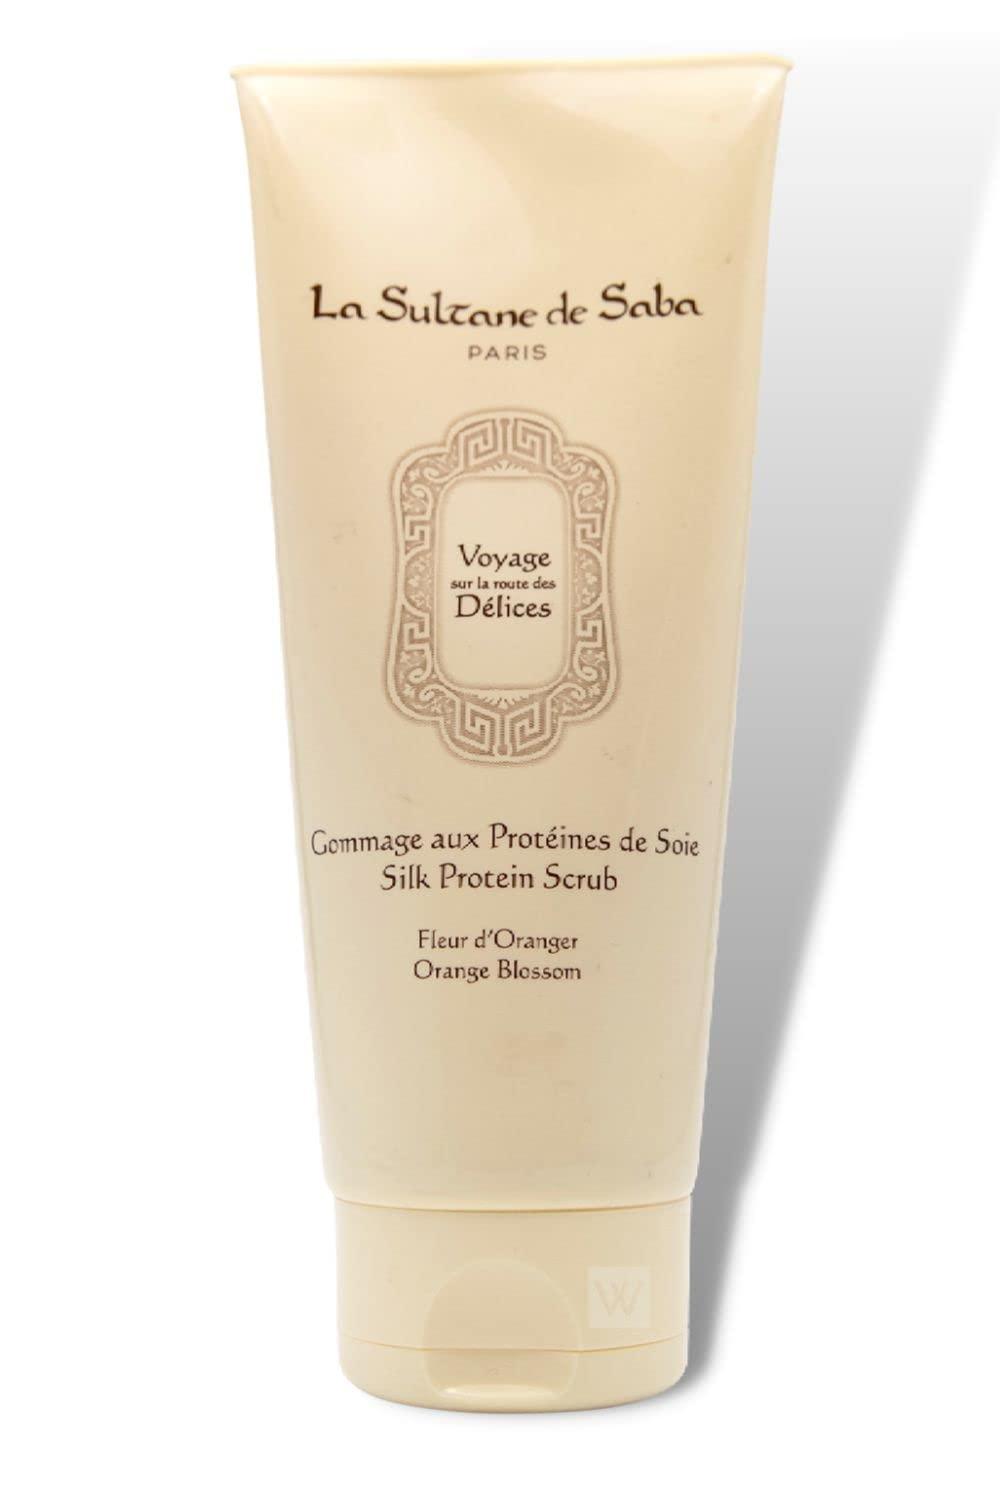 La Sultane de Saba - Beauty Brands